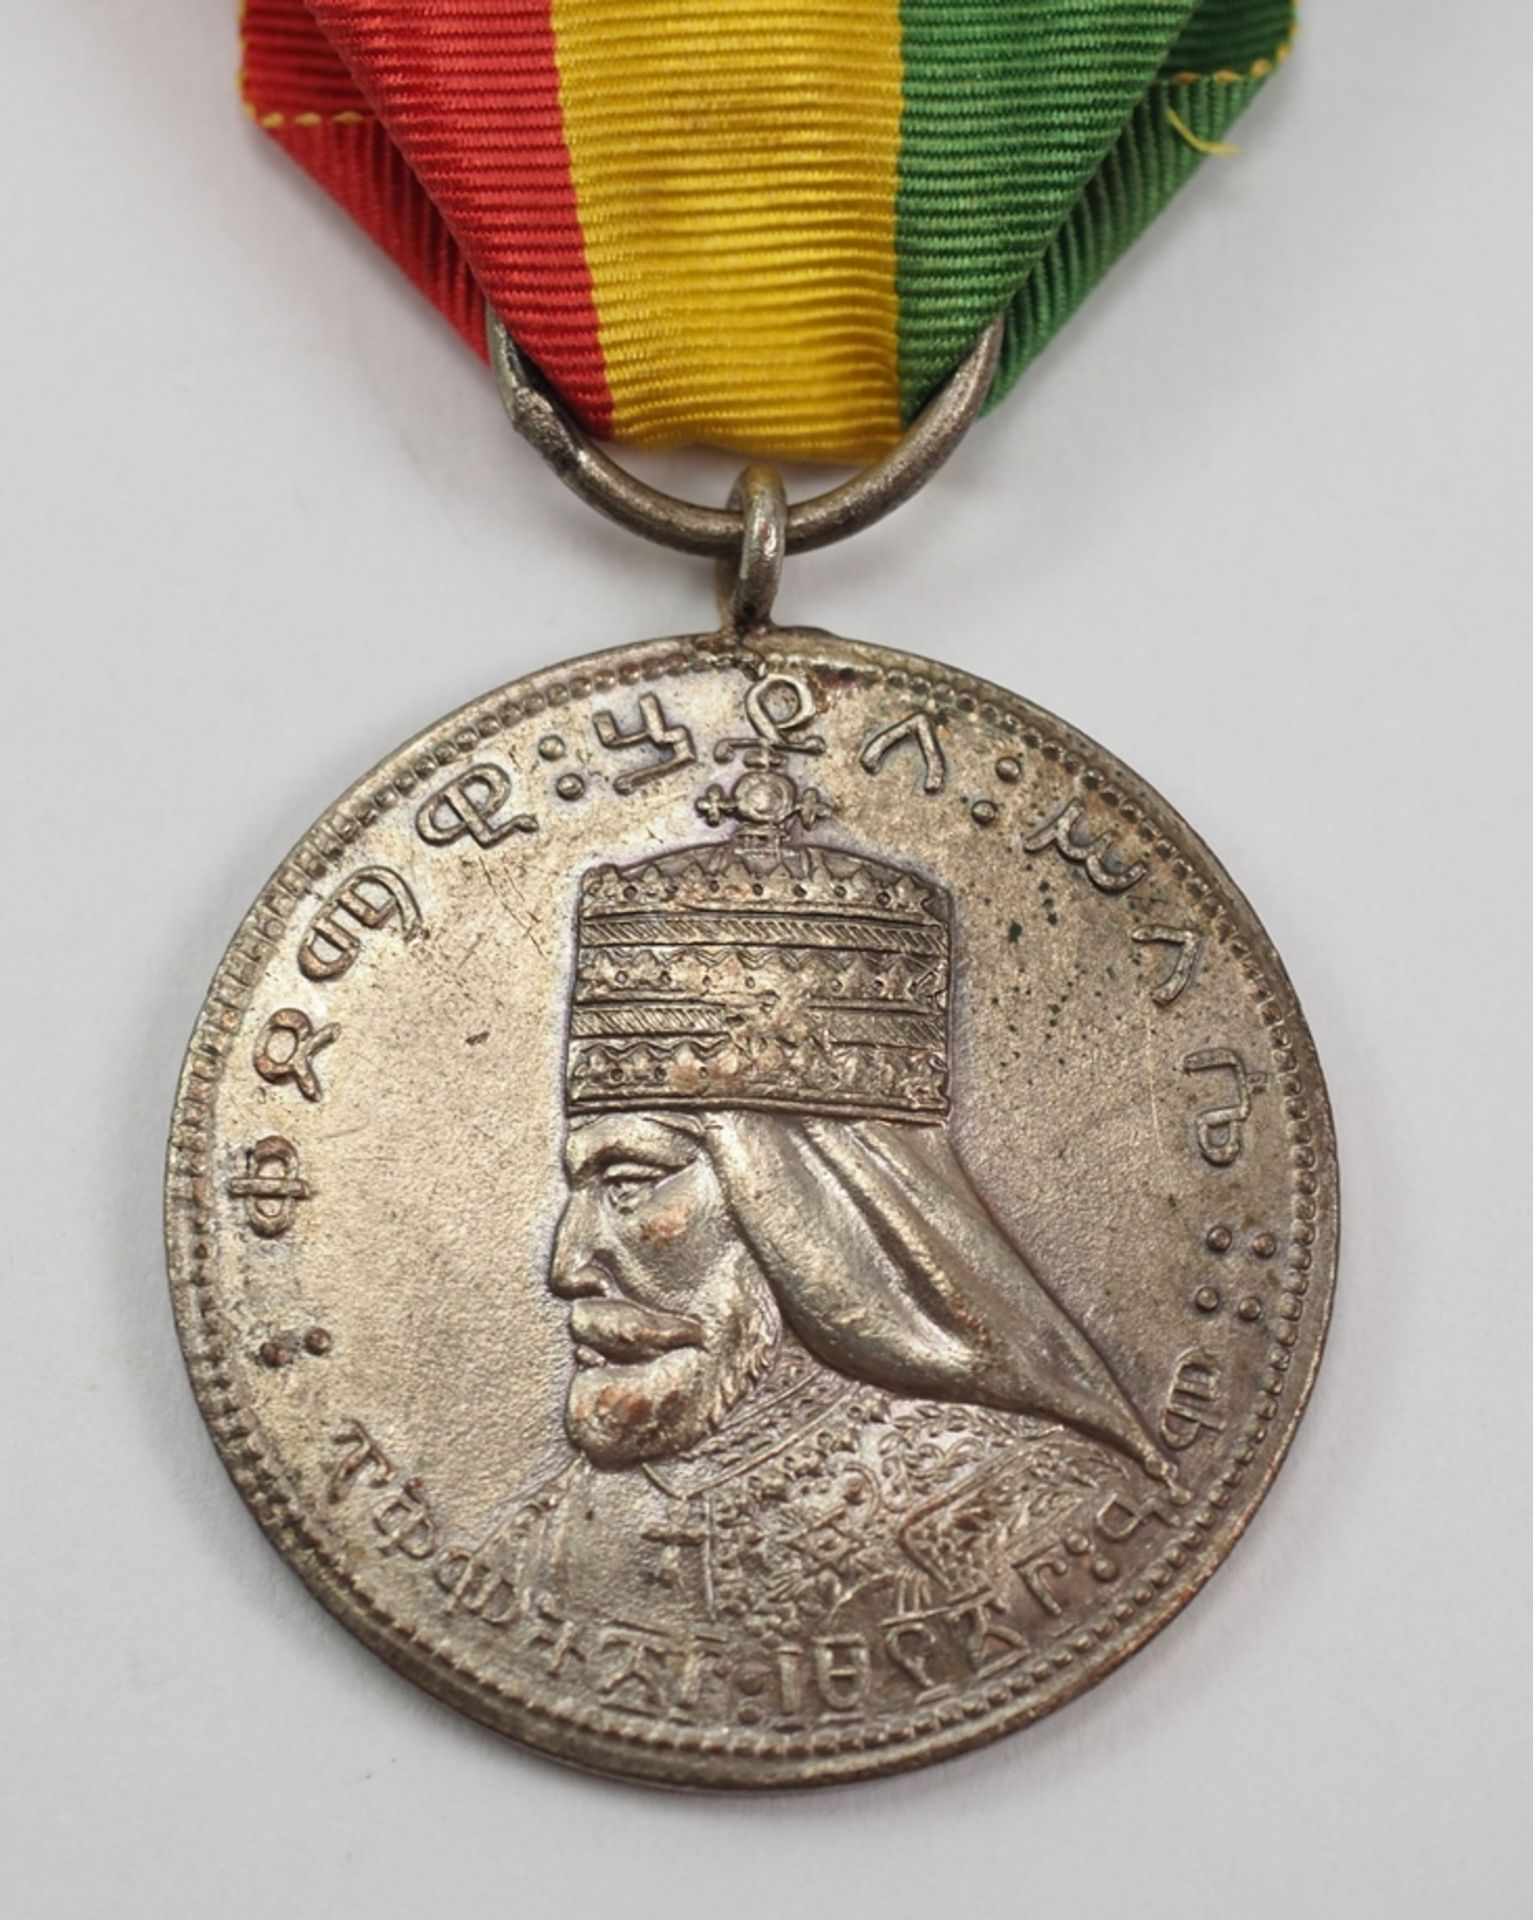 Äthiopien: Medaille auf die Krönung Haile Selassies, in Silber.